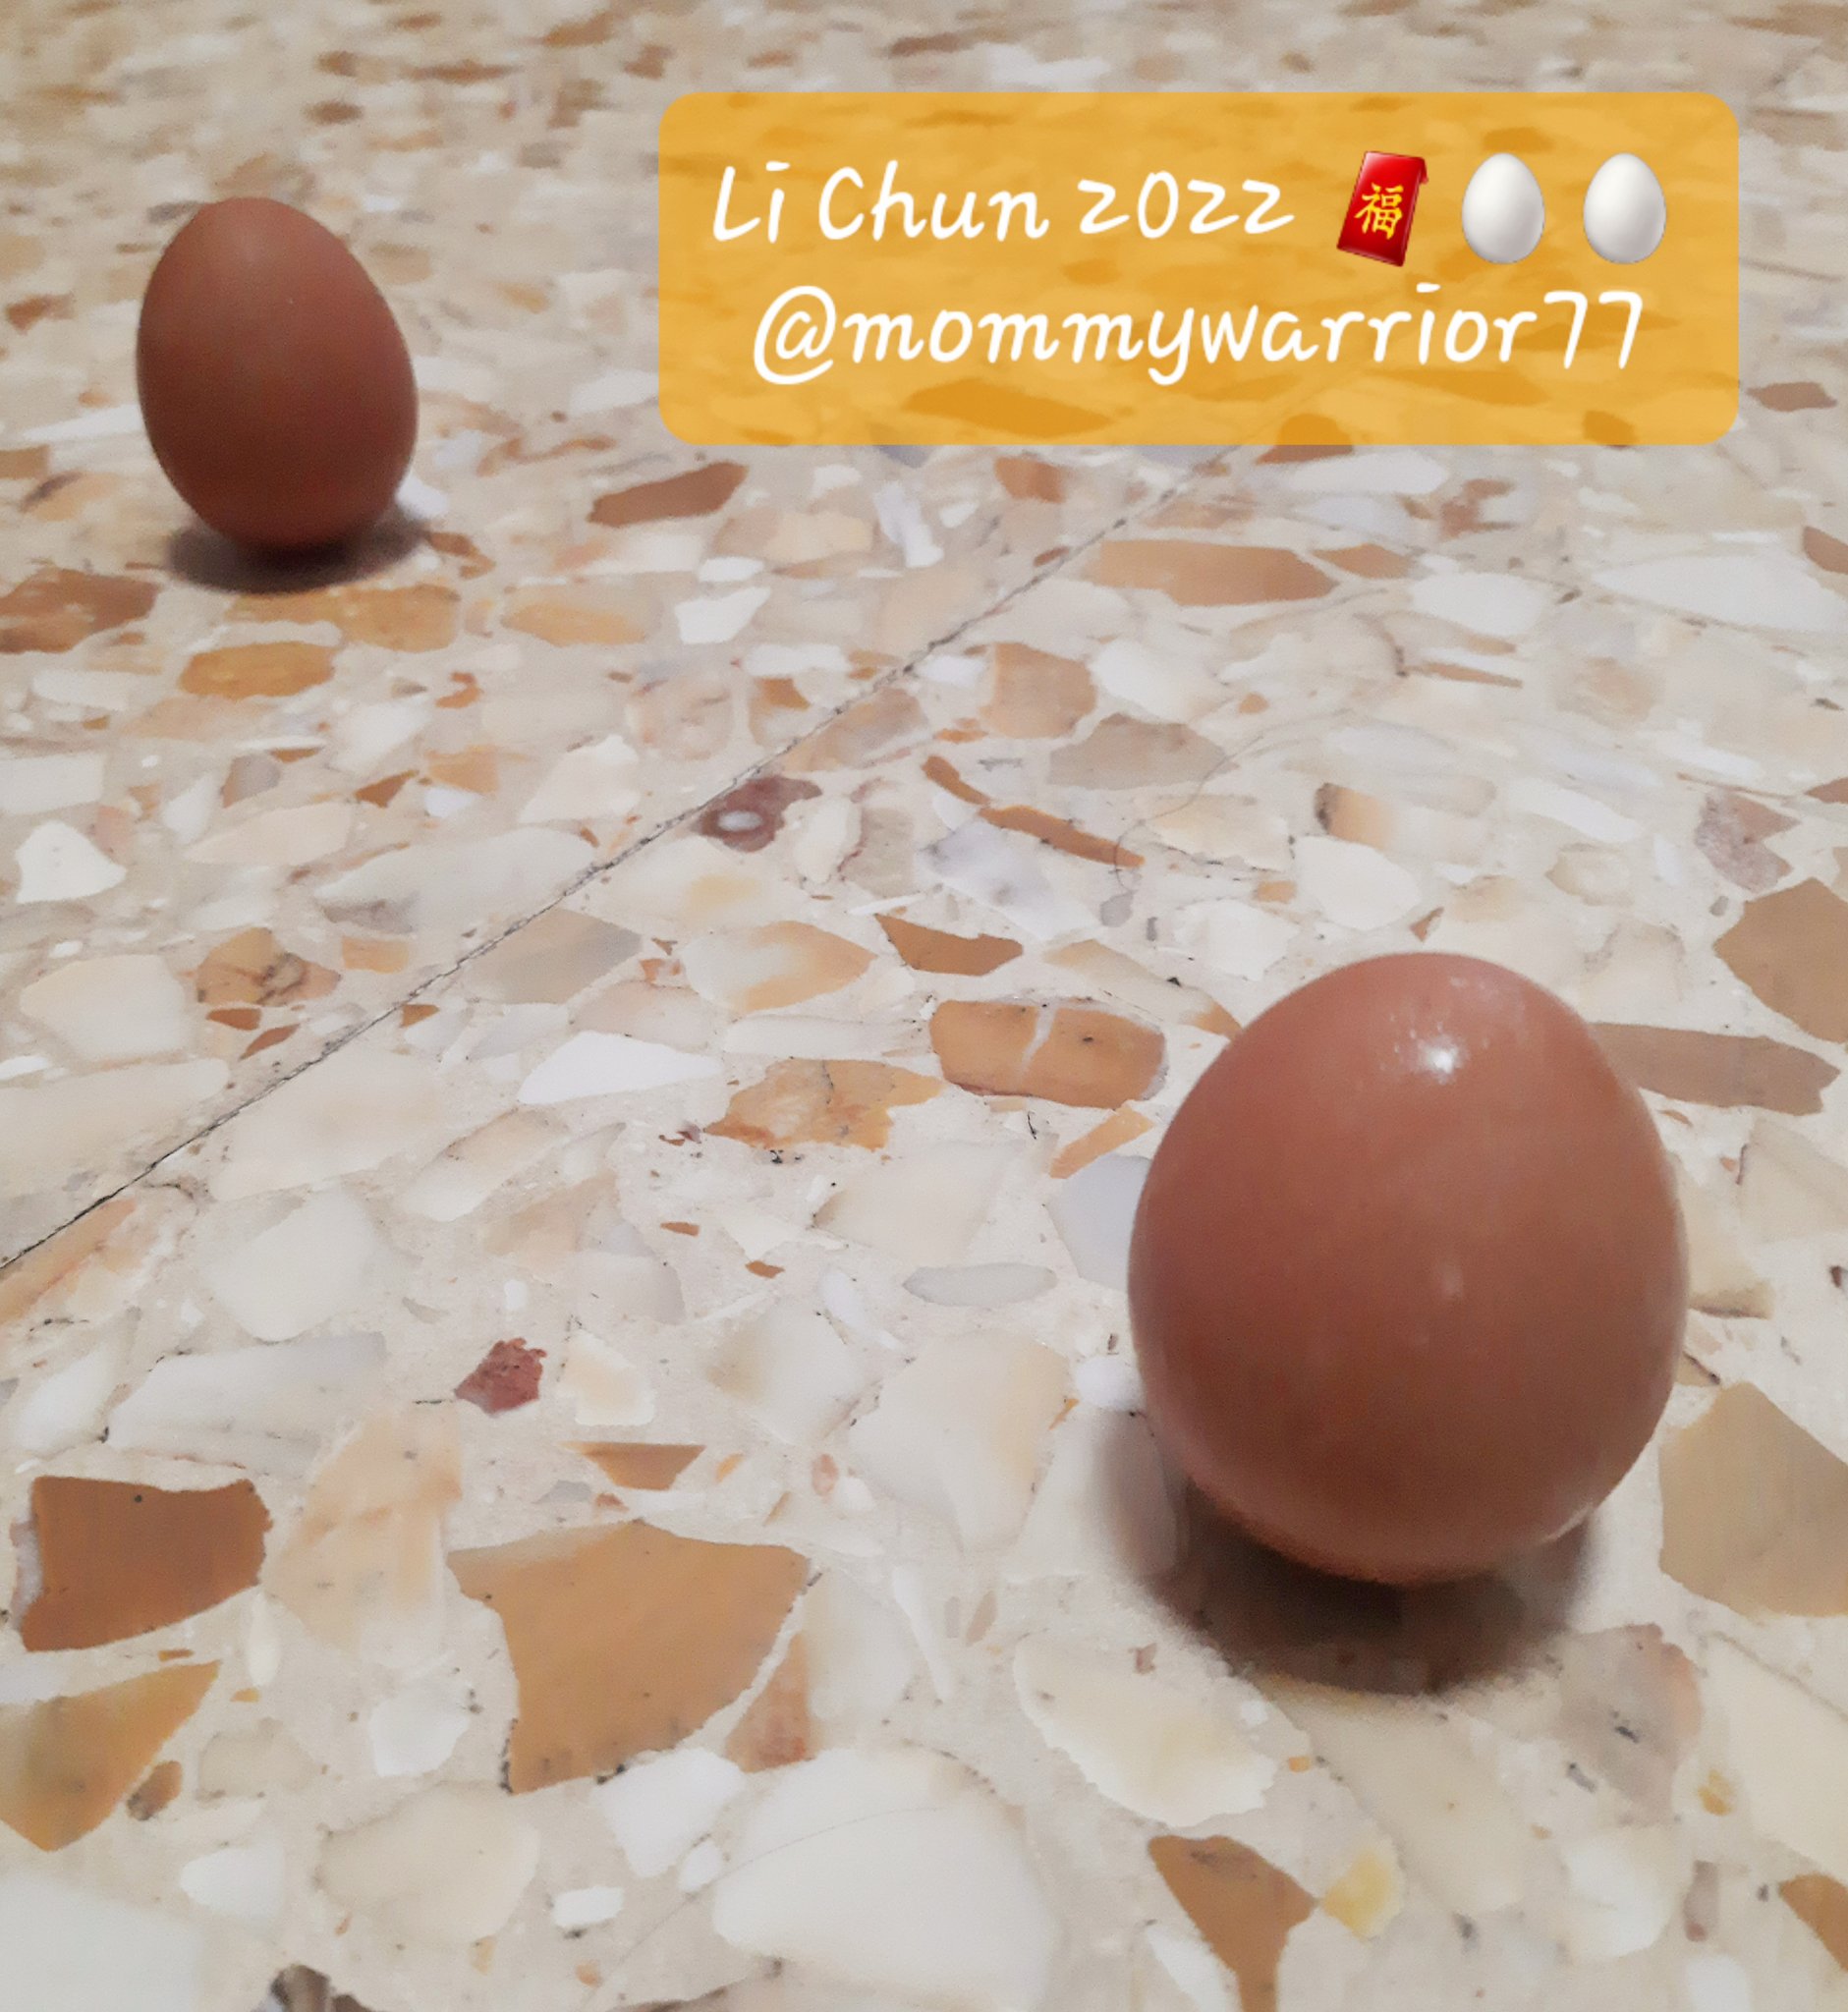 Li chun eggs